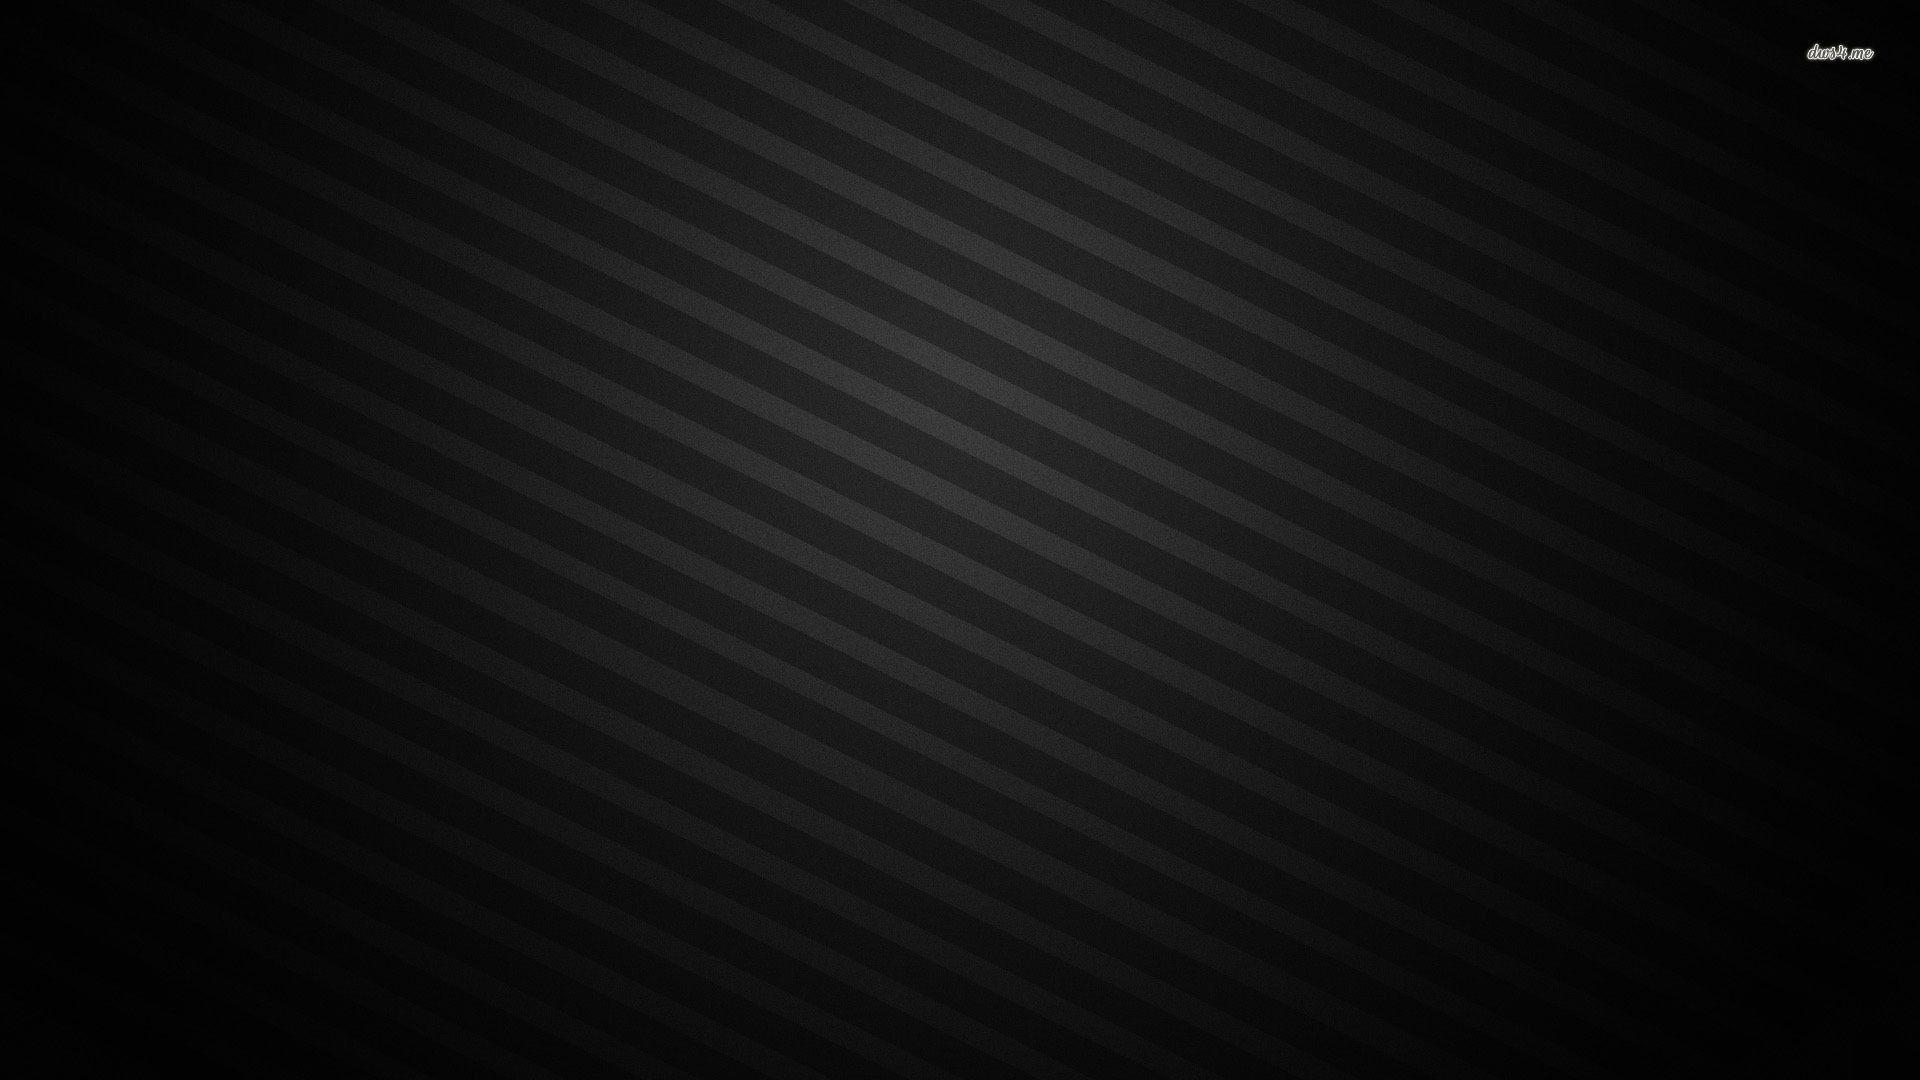 MX 486 Black Striped Wallpaper, Black Striped Adorable Desktop